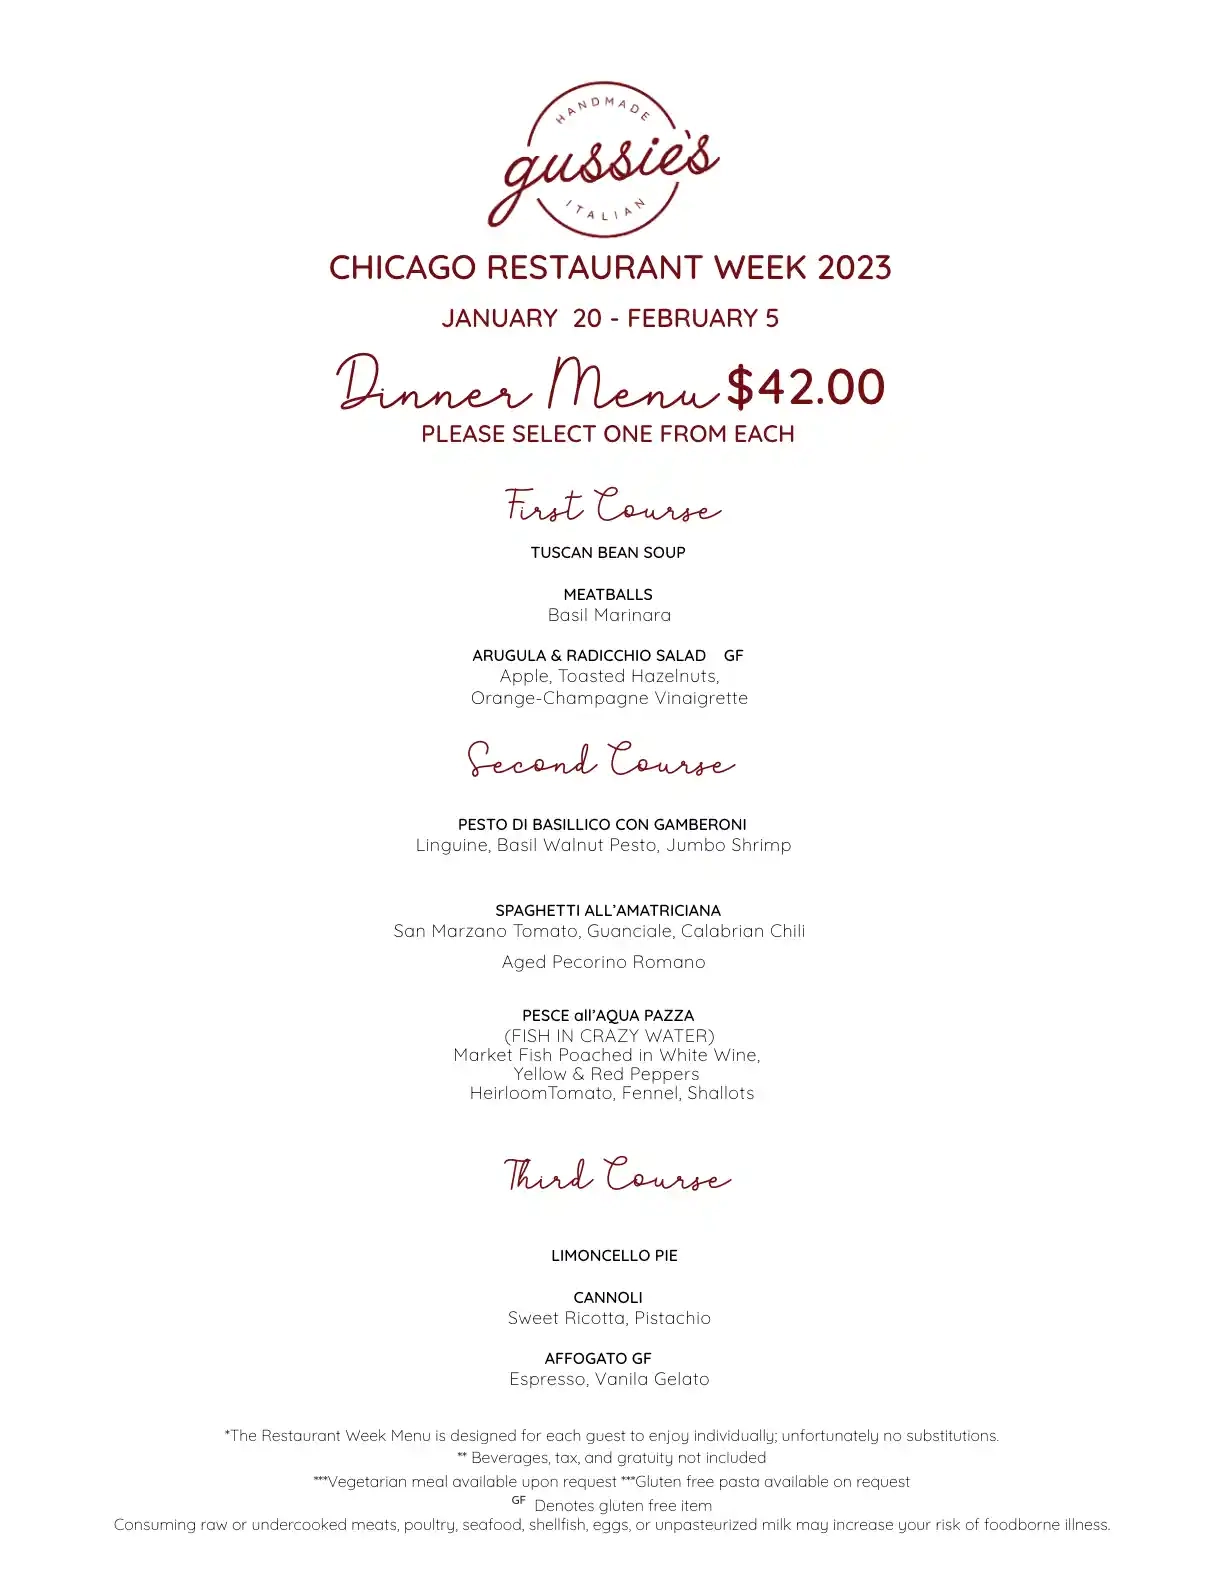 Chicago Restaurant Week 2023 Menu Gussies Handmade Italian